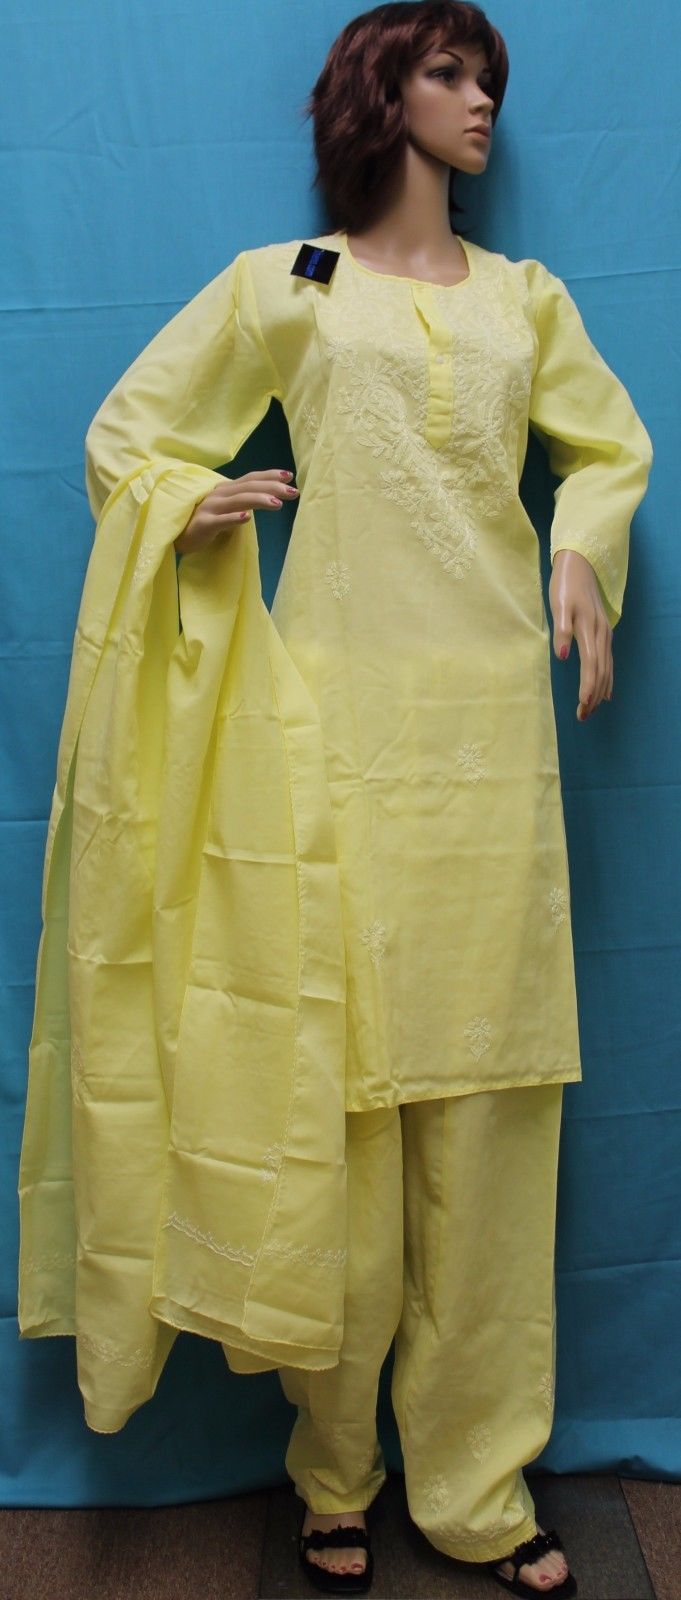 yellow salwar kameez designs